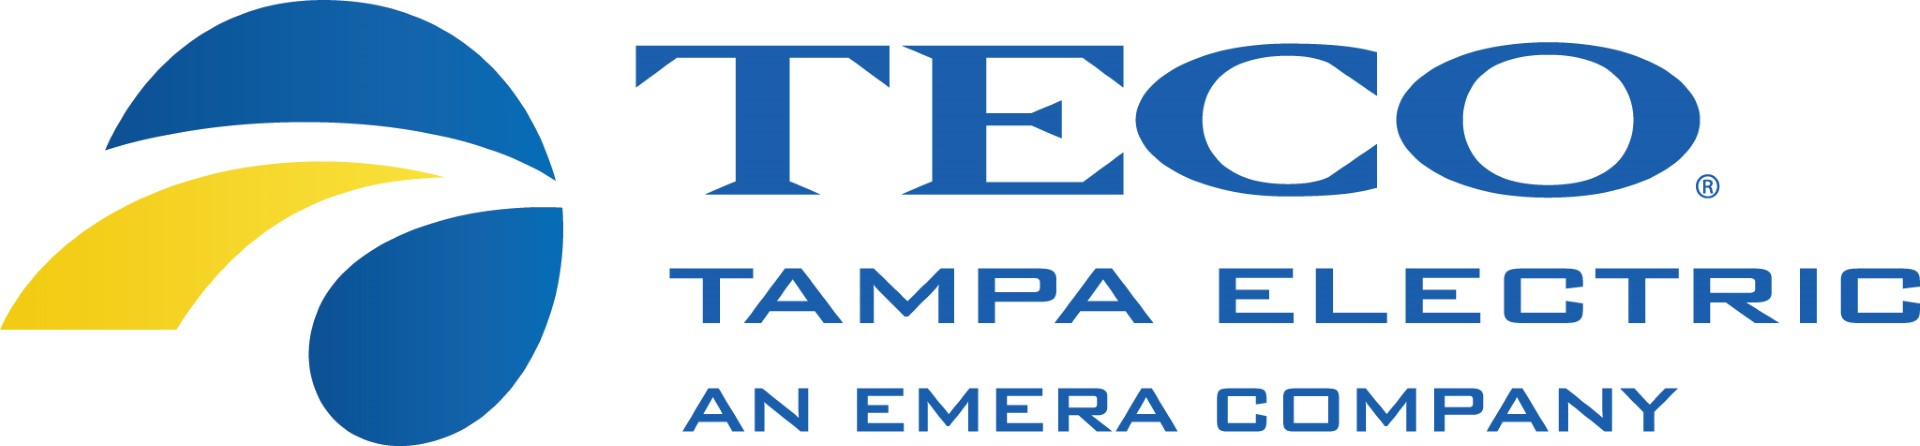 teco electric logo